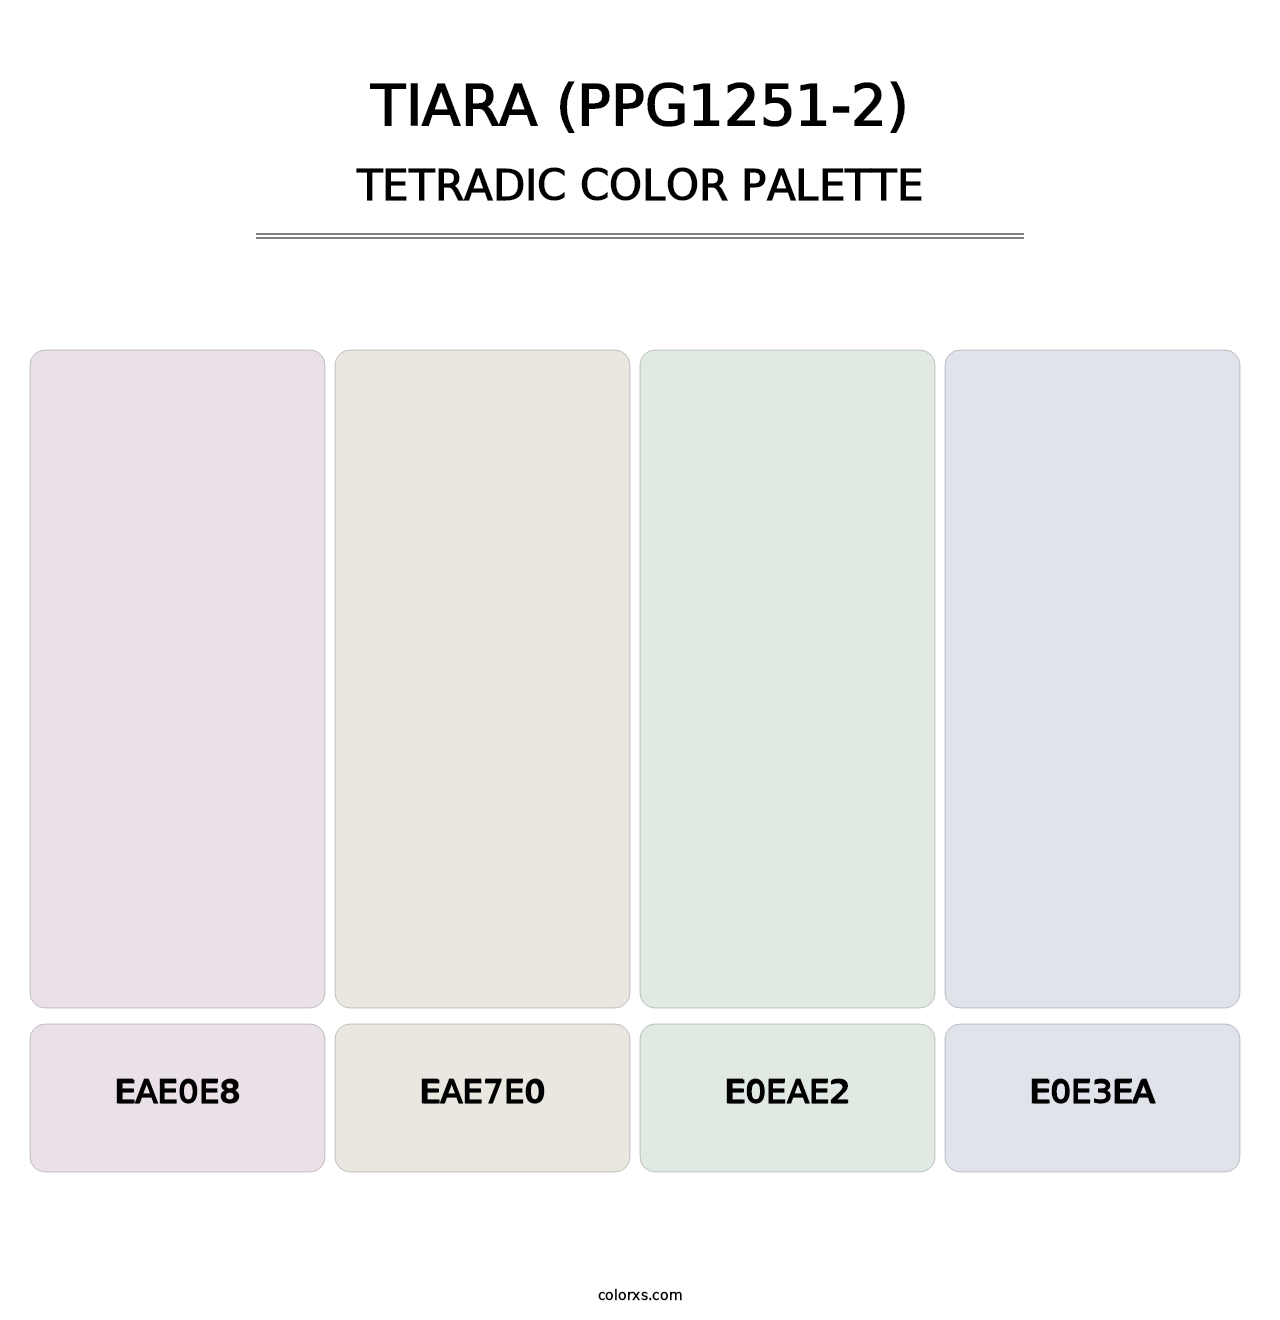 Tiara (PPG1251-2) - Tetradic Color Palette